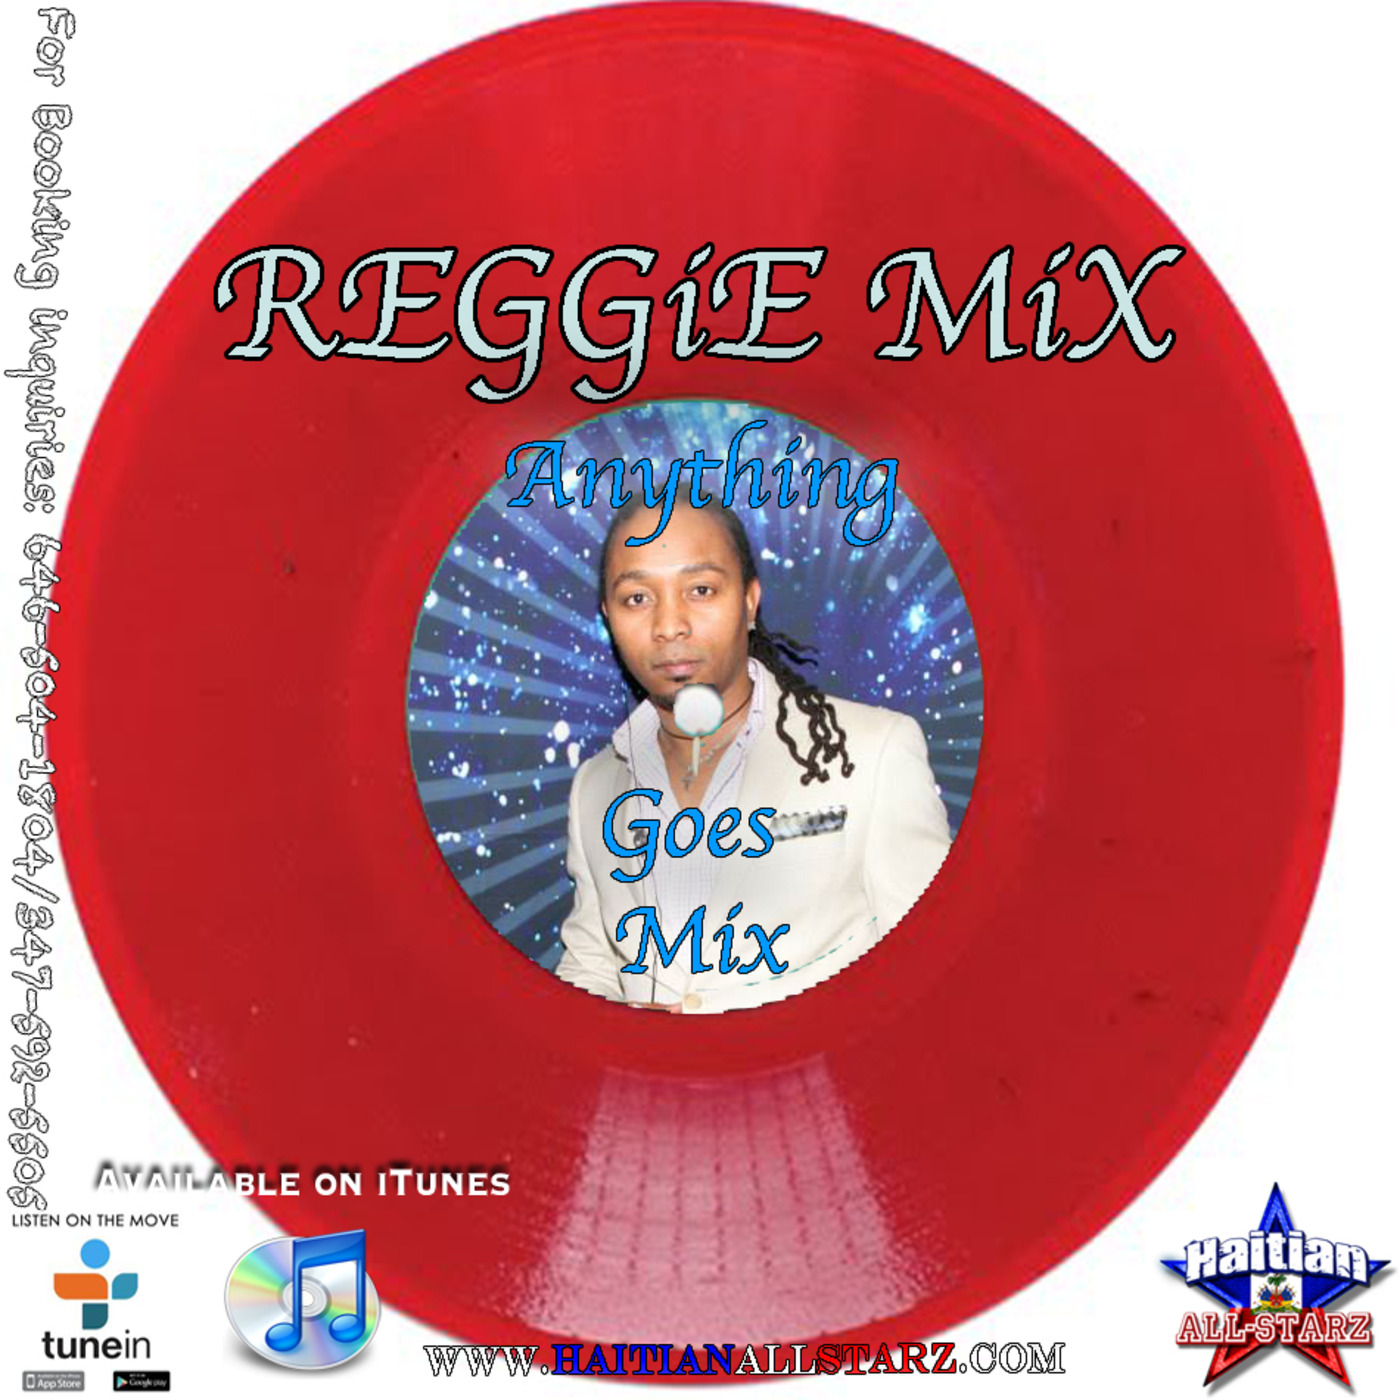 Anything Goes Mix - Reggie Mix {Haitian All-StarZ DJ}